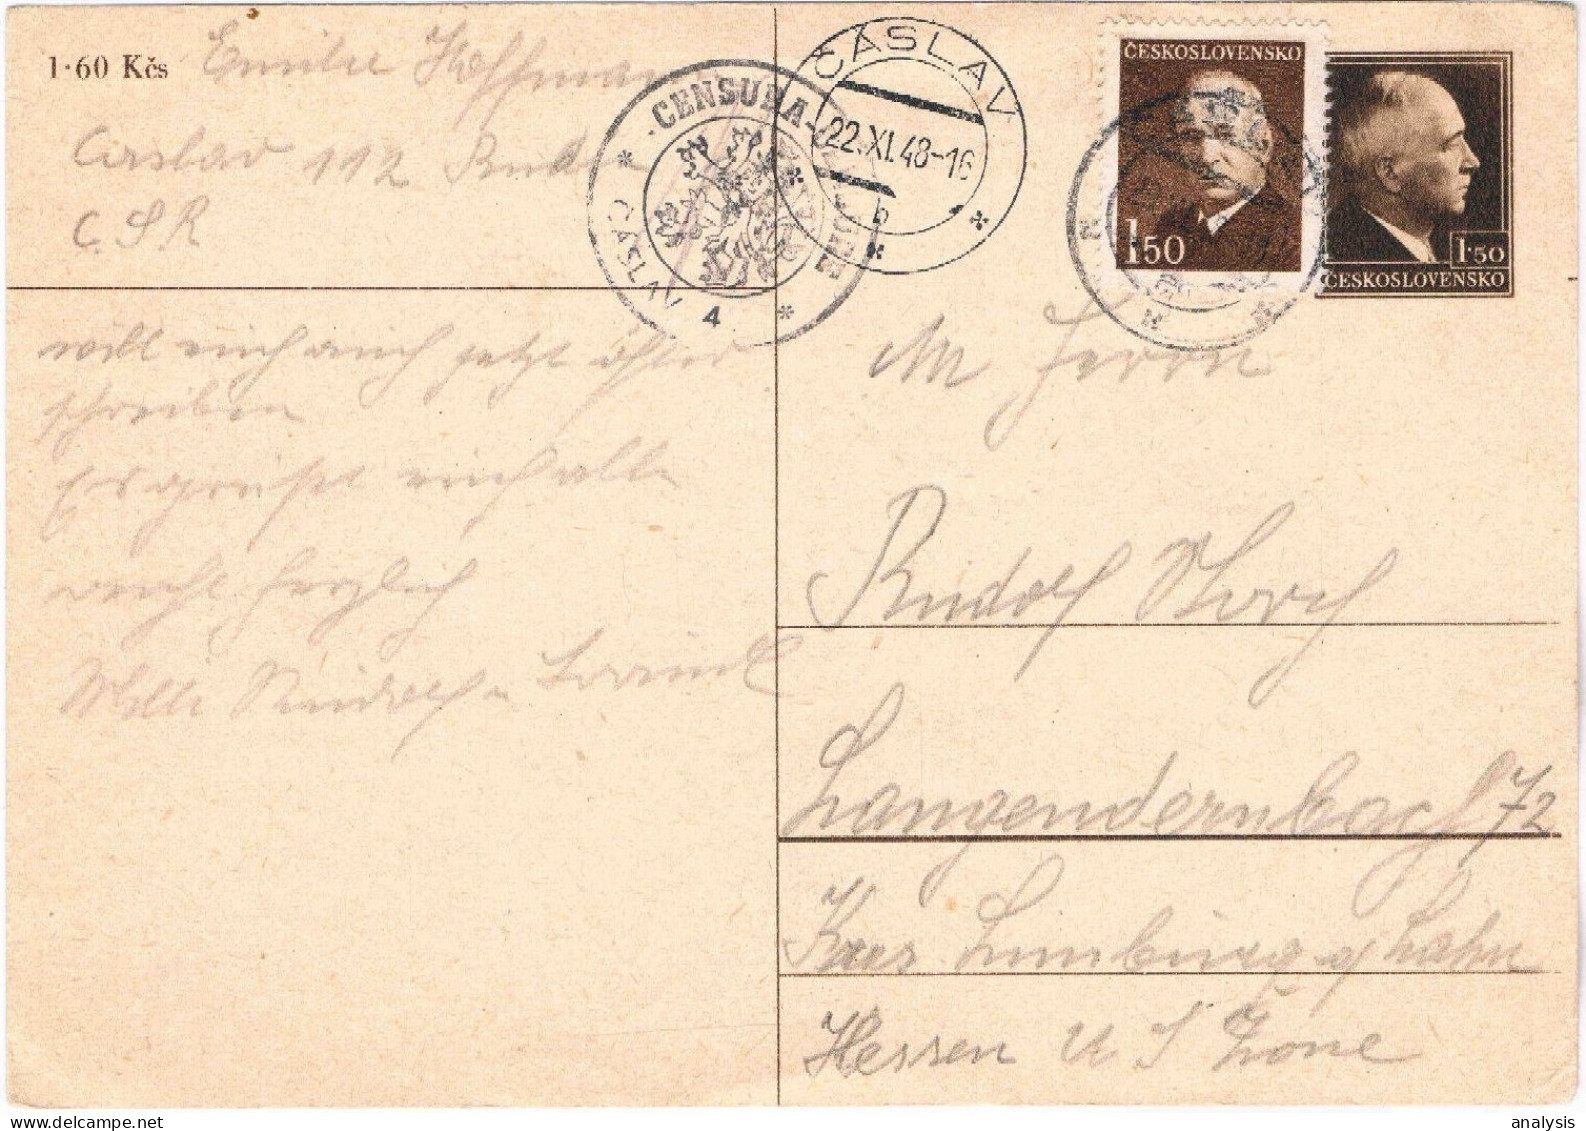 Czechoslovakia Caslav Uprated Postal Stationery Card Mailed To Germany 1948 Censor - Covers & Documents